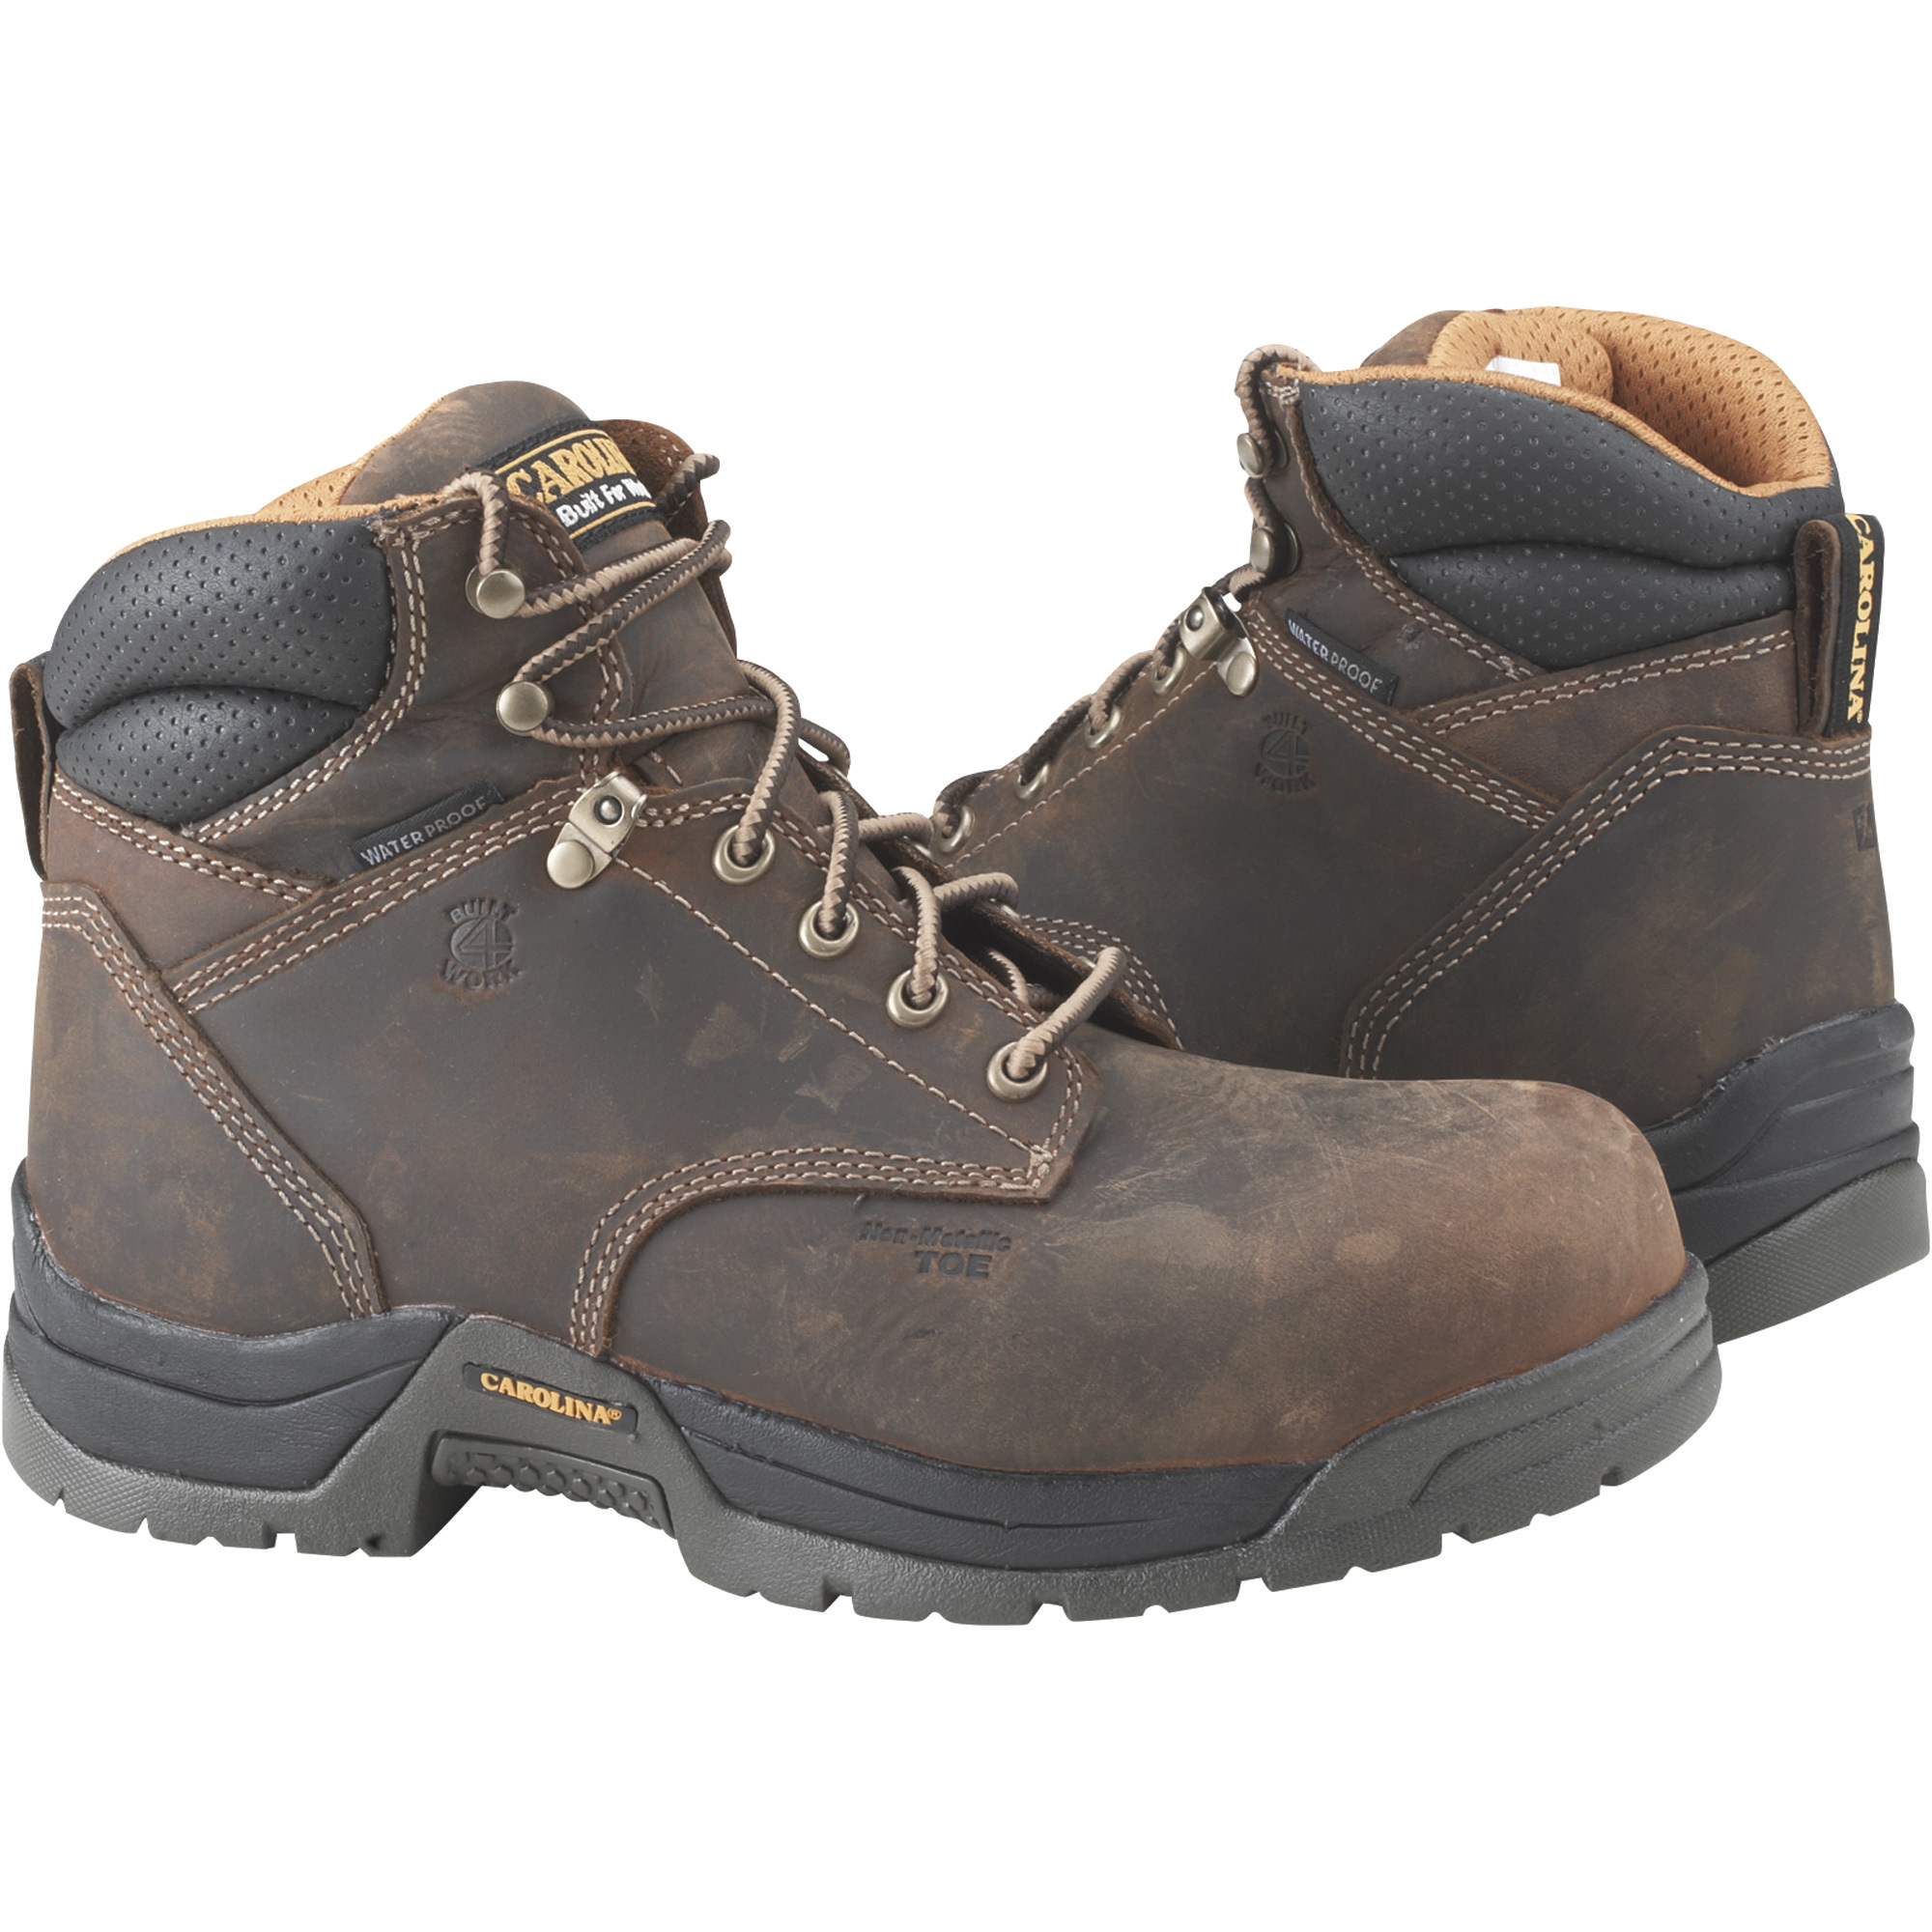 Carolina Men's 6Inch Waterproof Safety Toe Work Boots â Brown, Size 11 Wide, Model CA5520